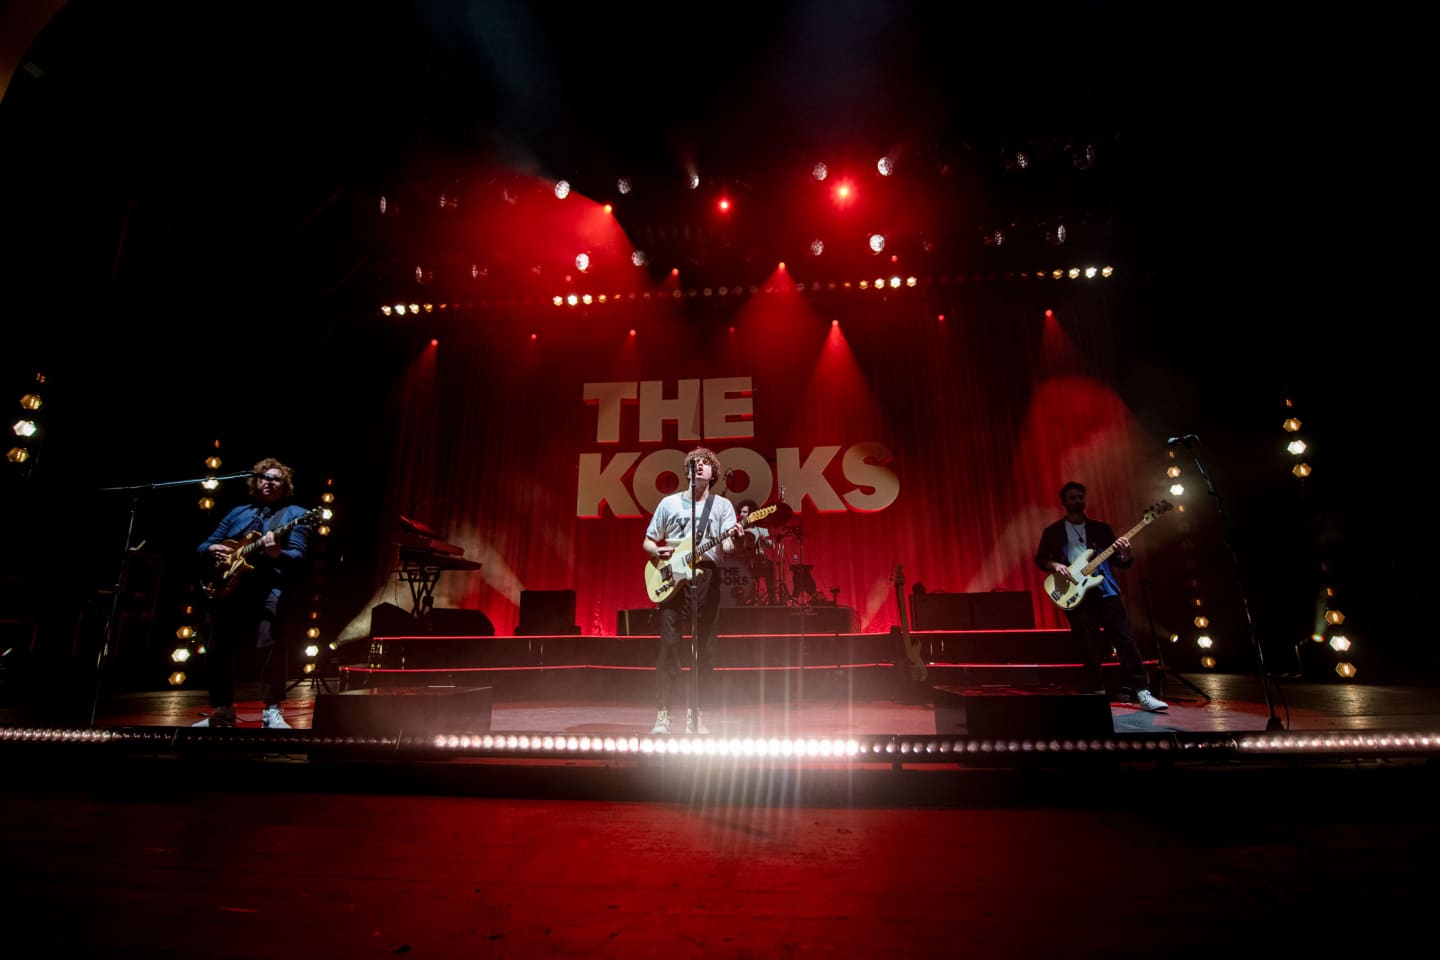 The Kooks Tickets The Kooks Tour Dates and Concert Tickets viagogo